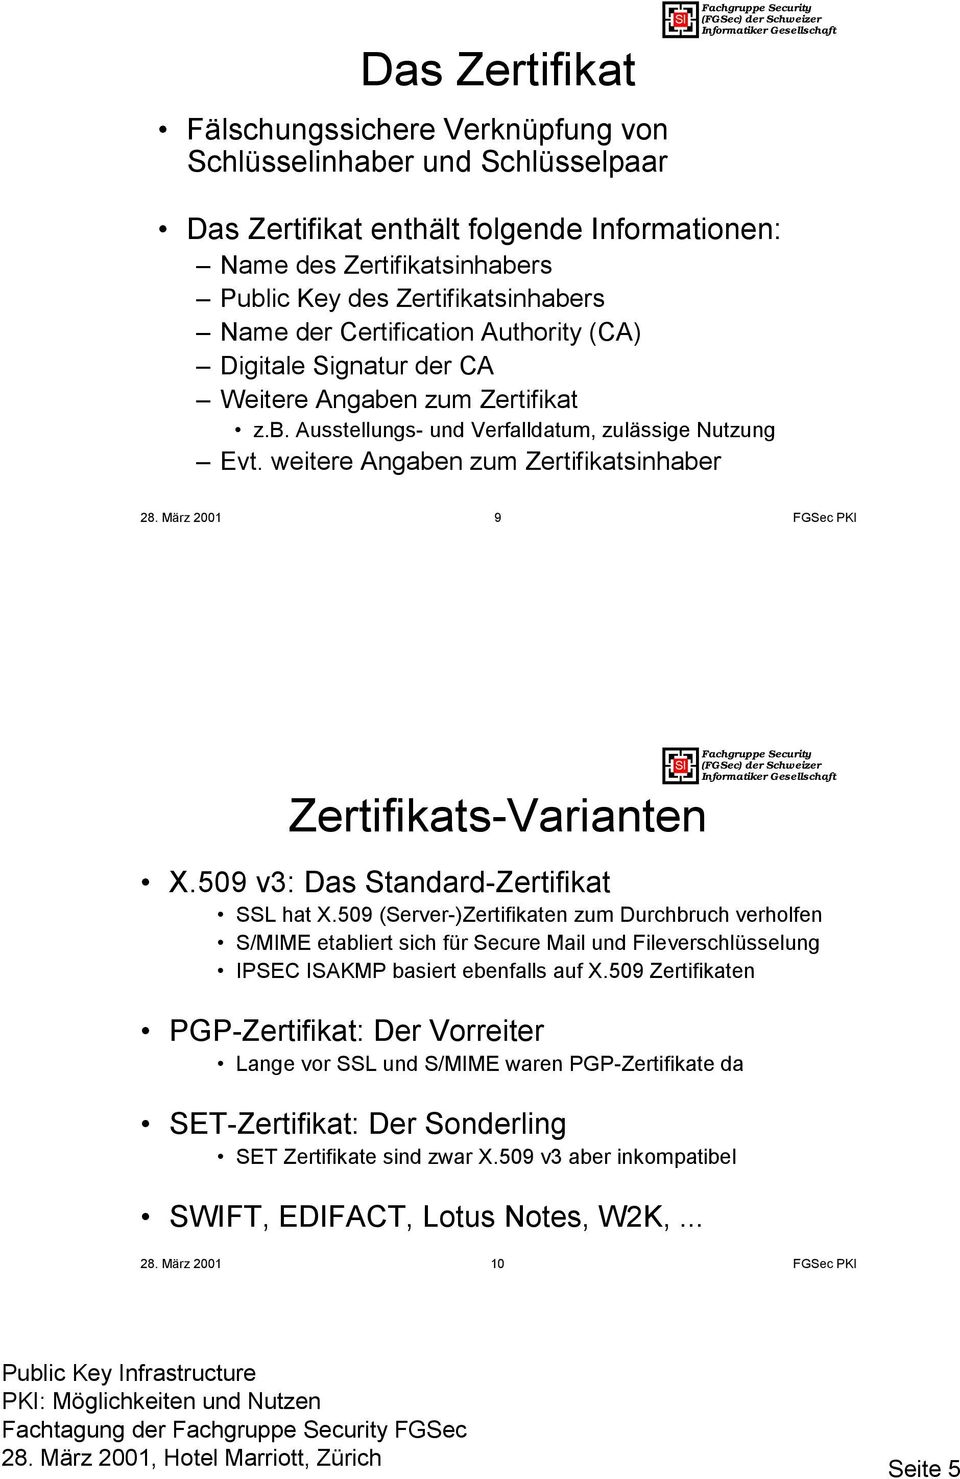 März 2001 9 Zertifikats-Varianten 28. März 2001 10 X.509 v3: Das Standard-Zertifikat SSL hat X.